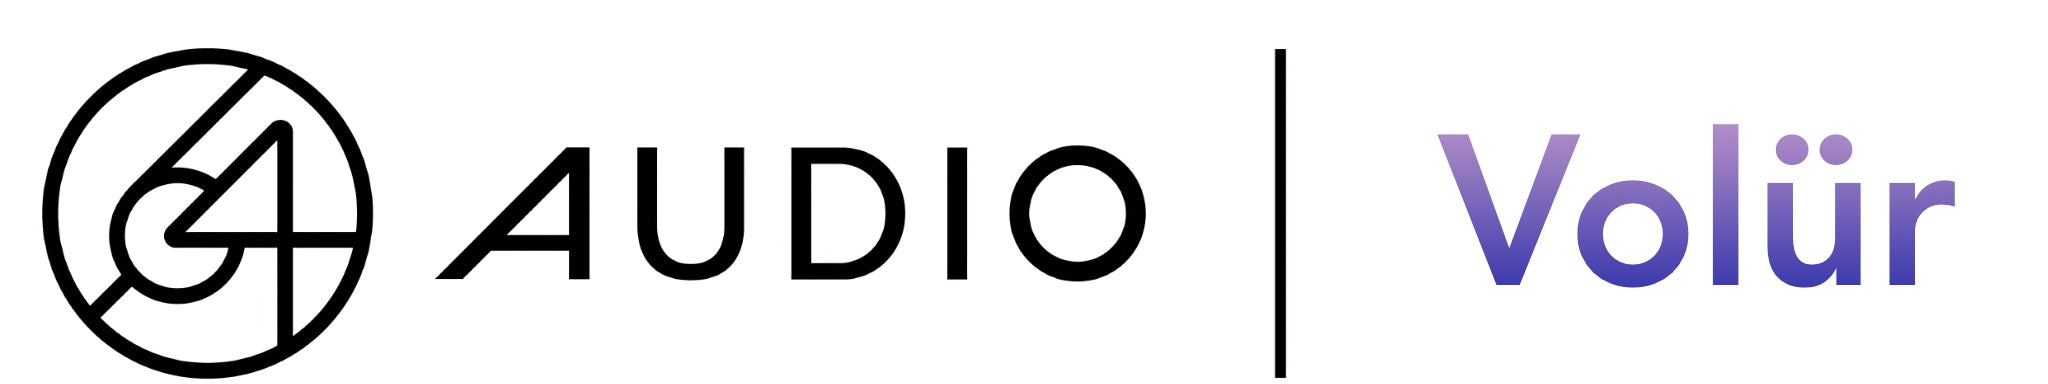 64 Audio Volür custom logo